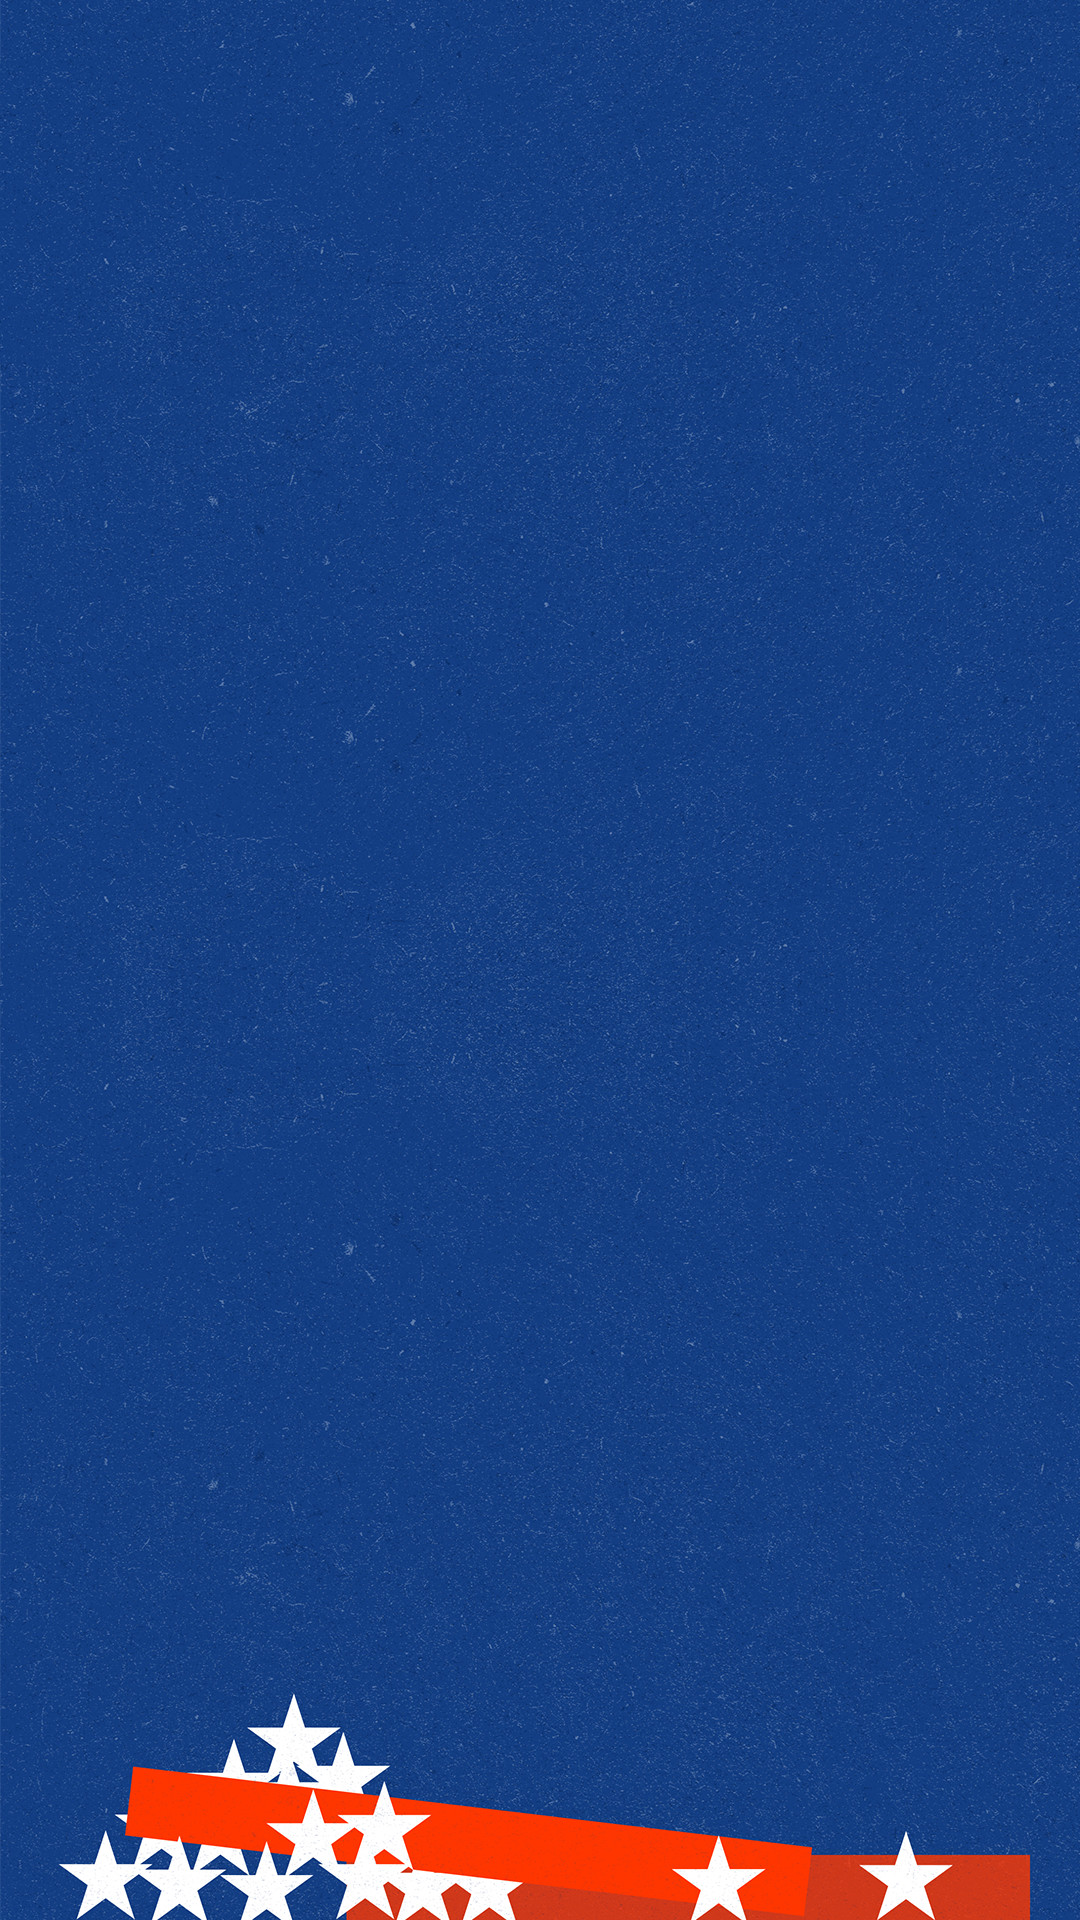 1080x1920 Phone background wallpaper – fallen stars and stripes - sad flag